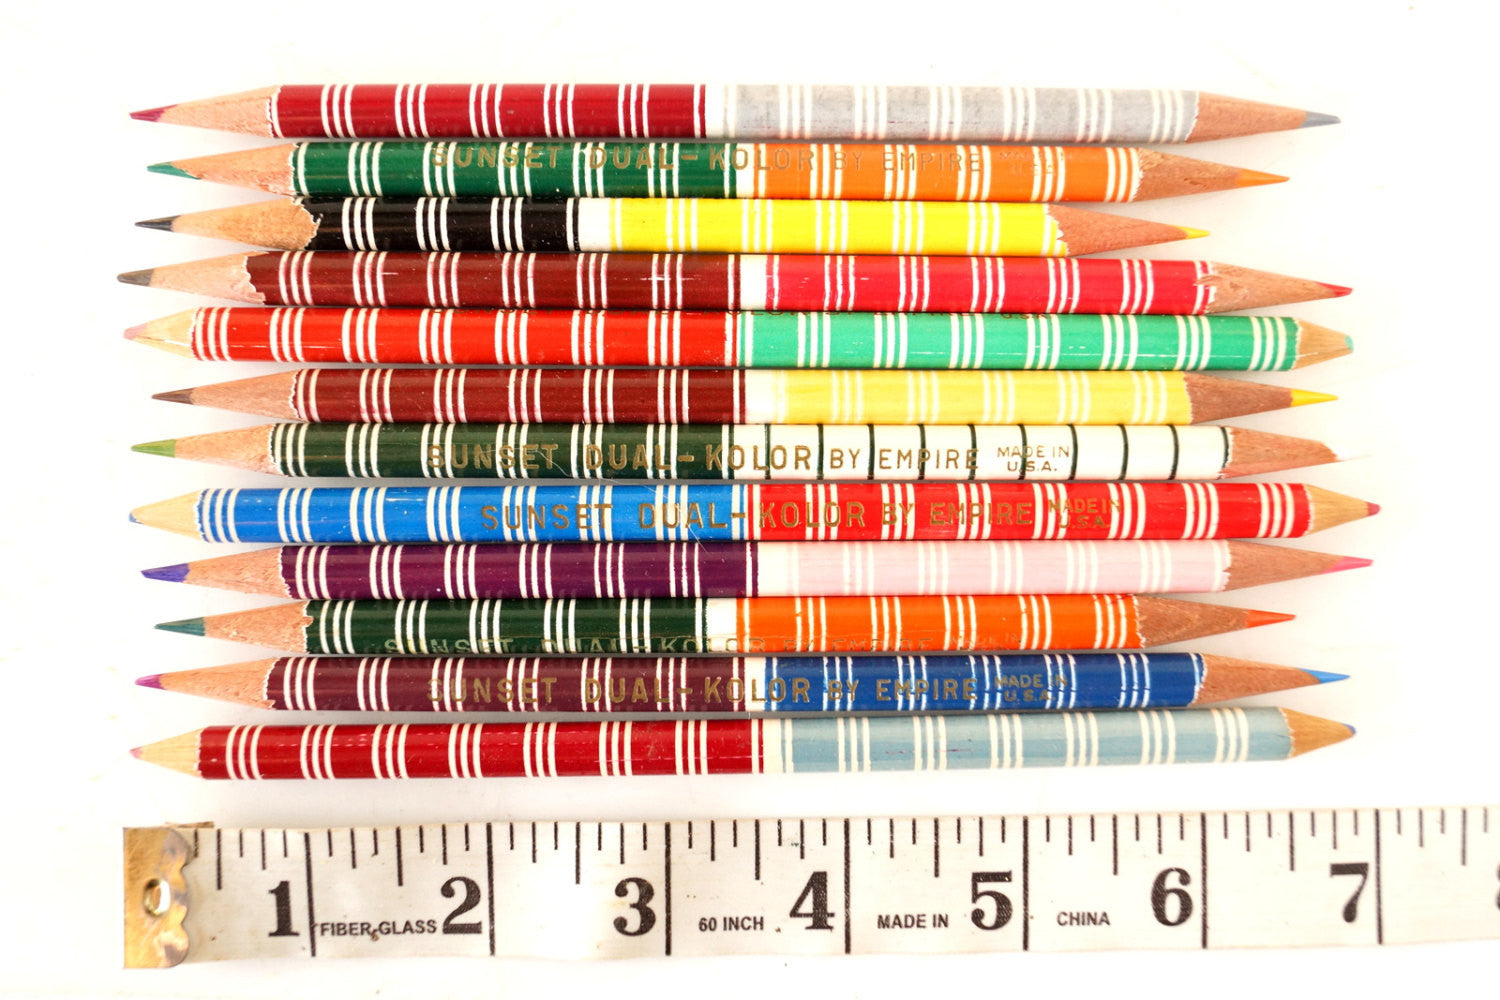 Origin Story Color-Changing Pencils